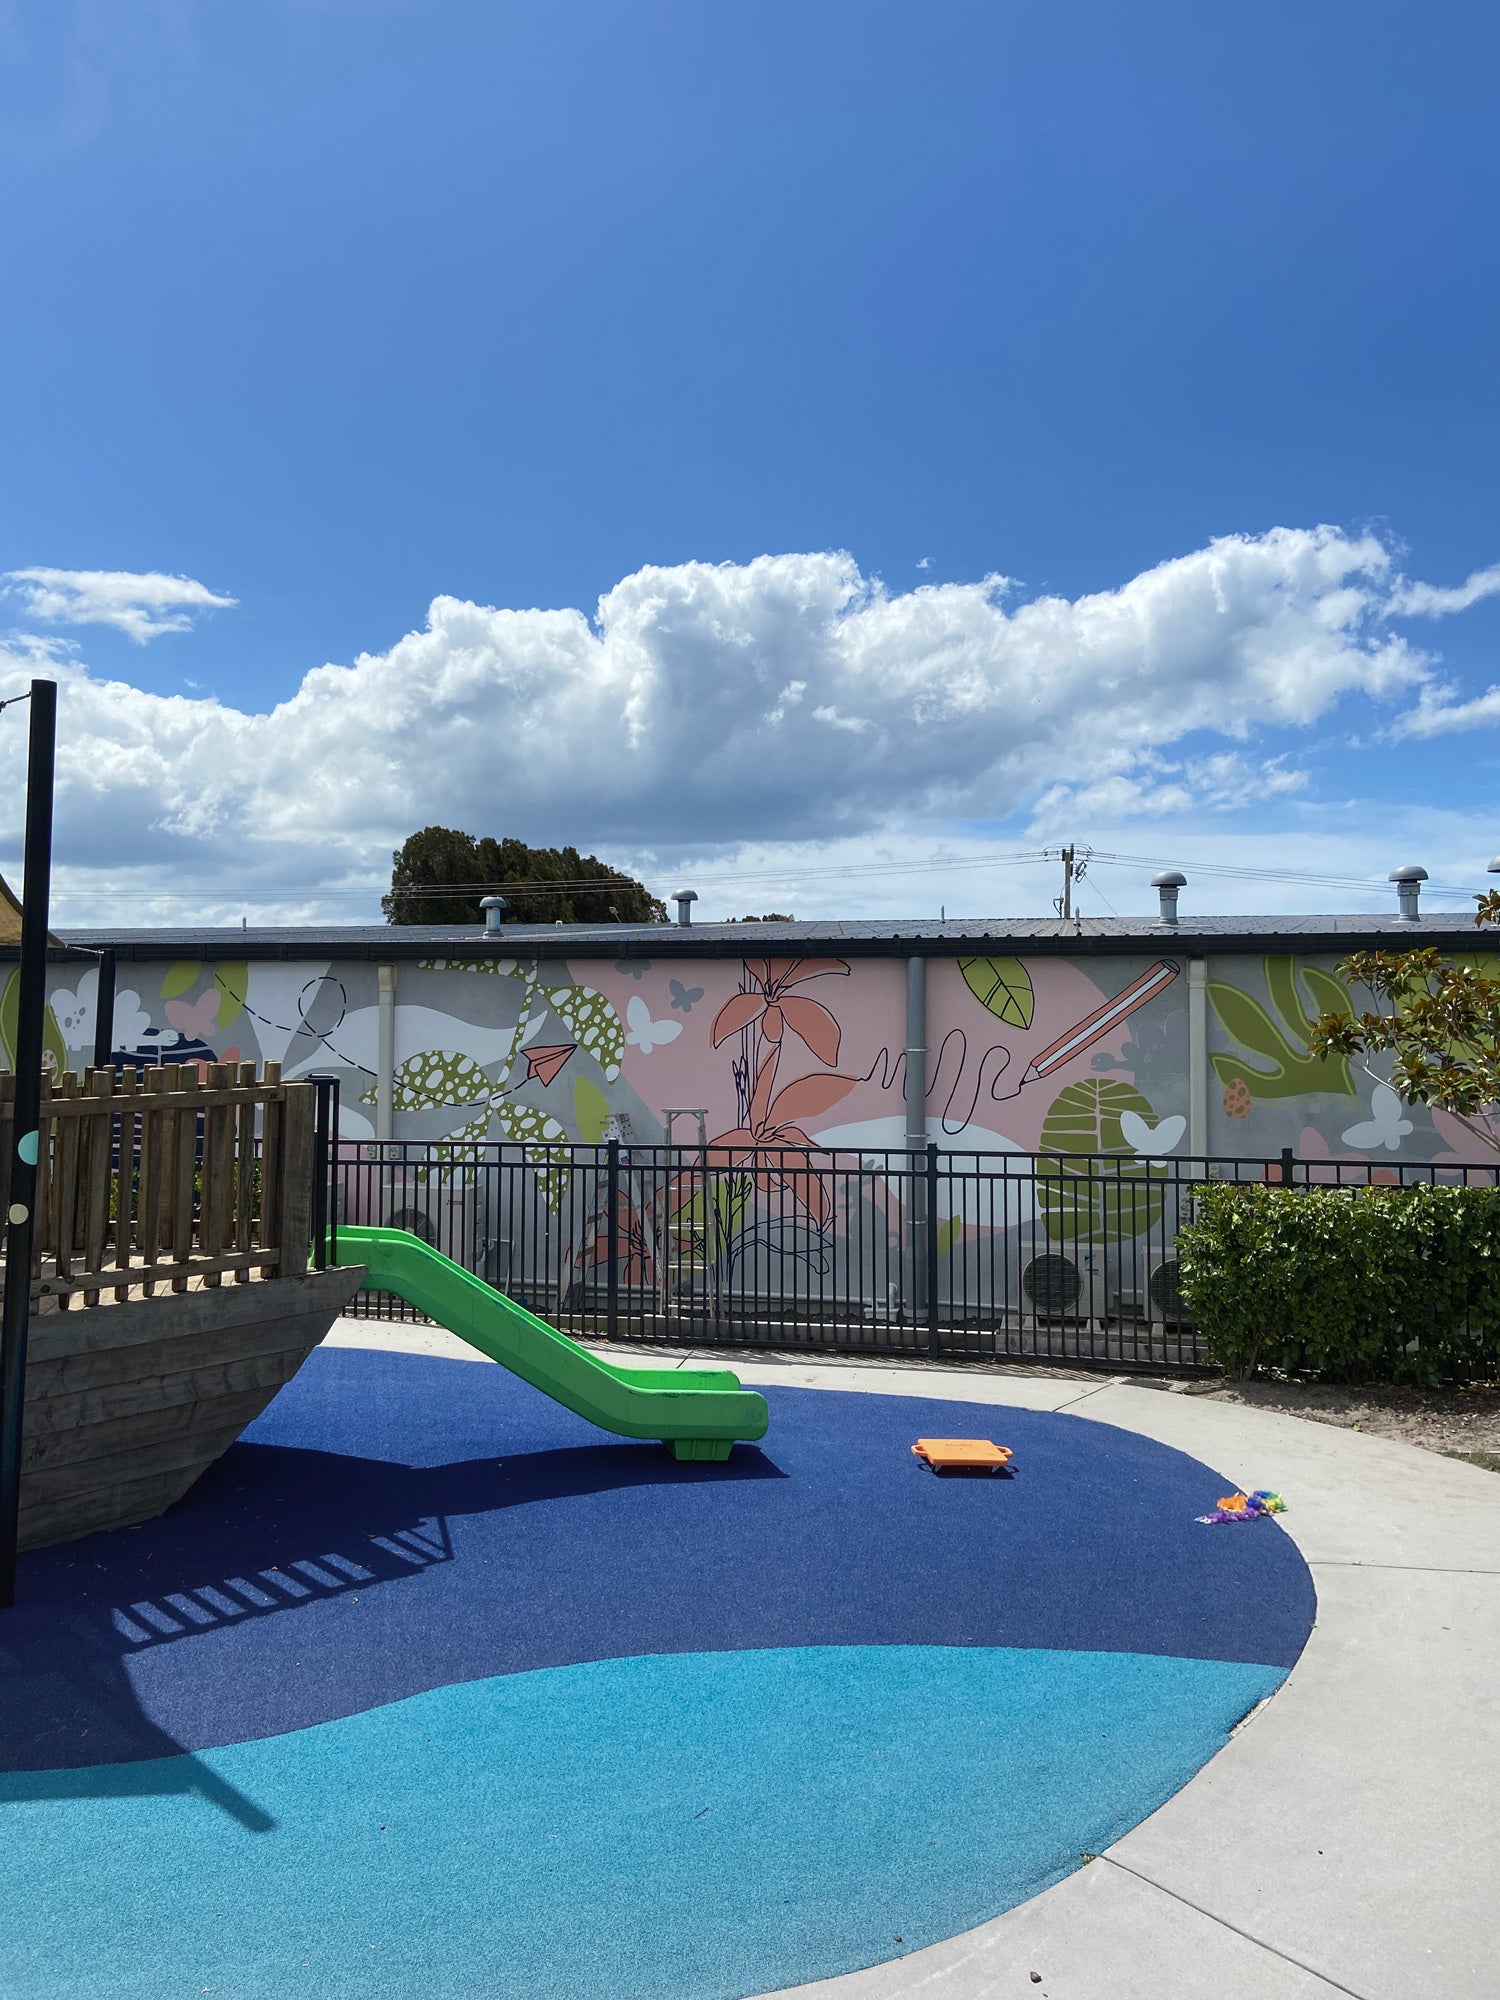 mural-child-playground-outdoor-education-nz